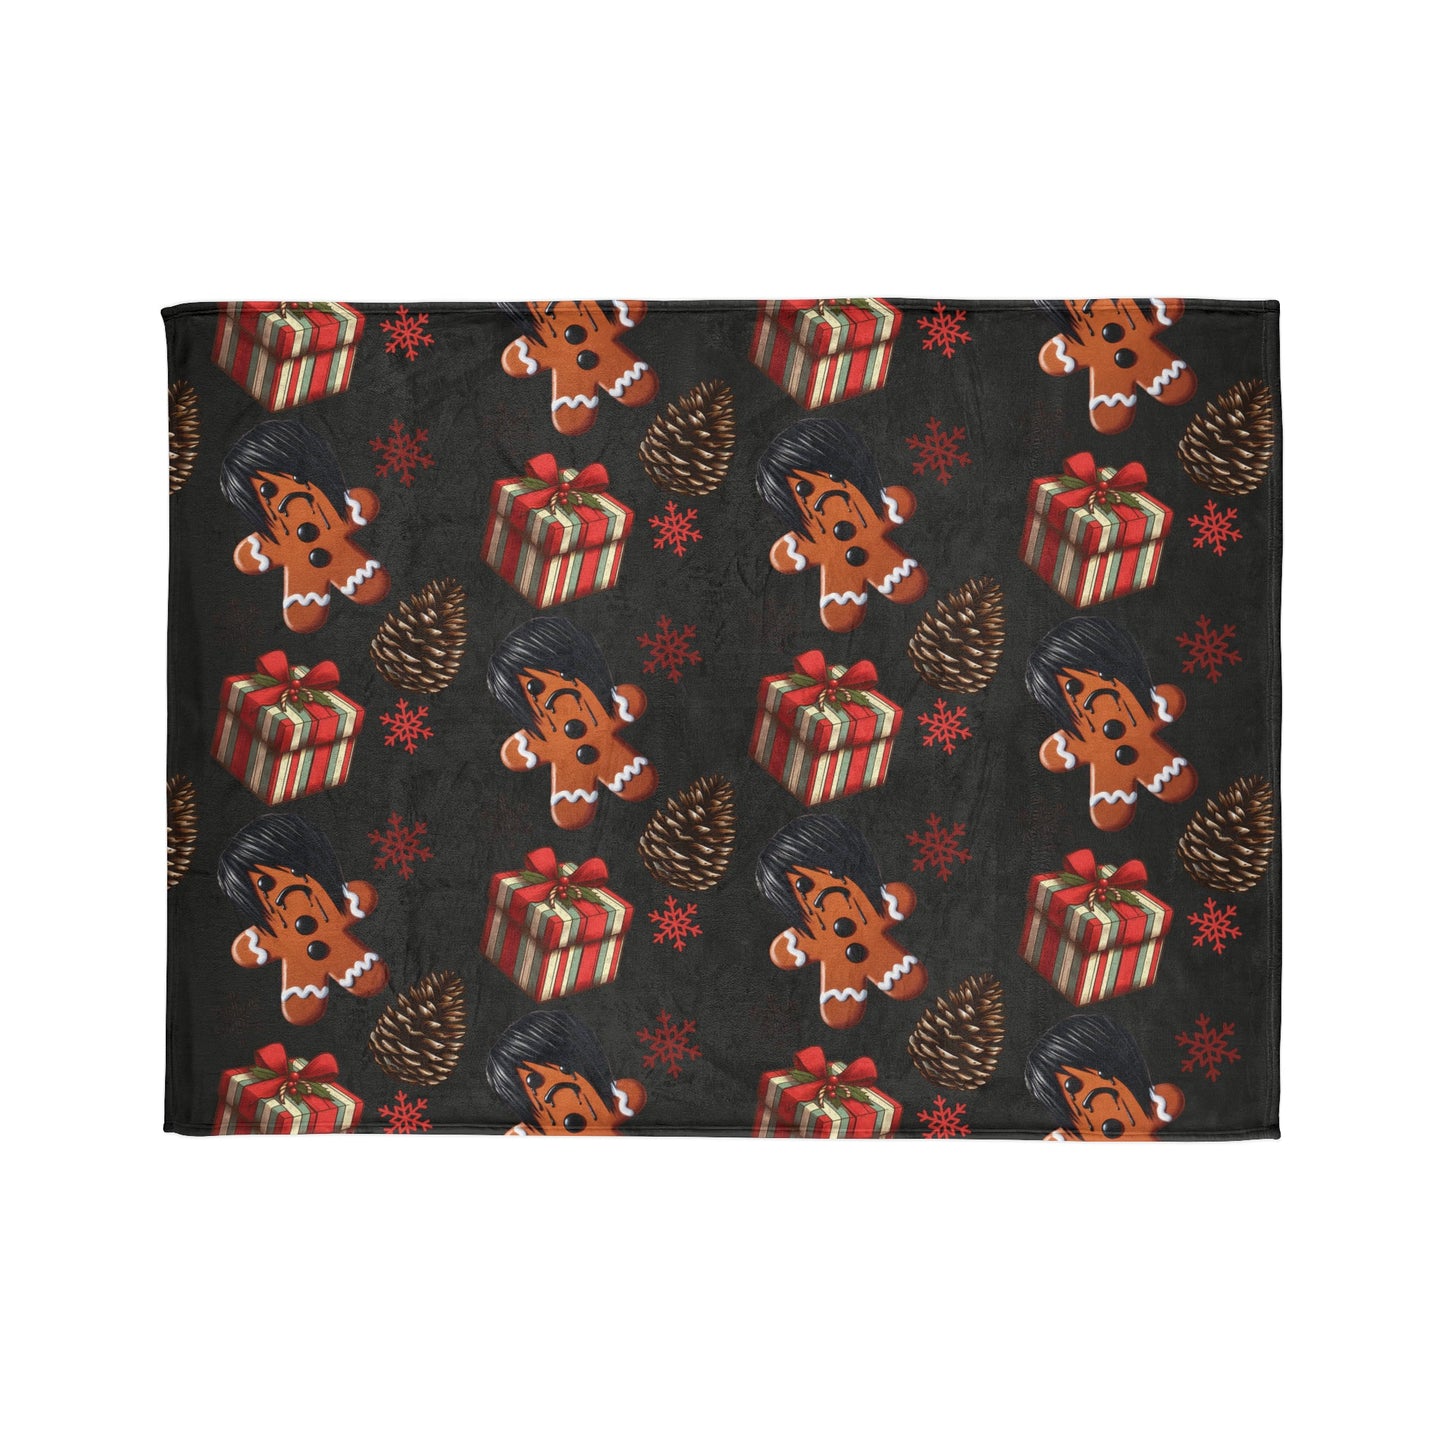 Emo Gingerbread Man BlanketHome DecorVTZdesigns50" × 60"BedBeddingBlankets